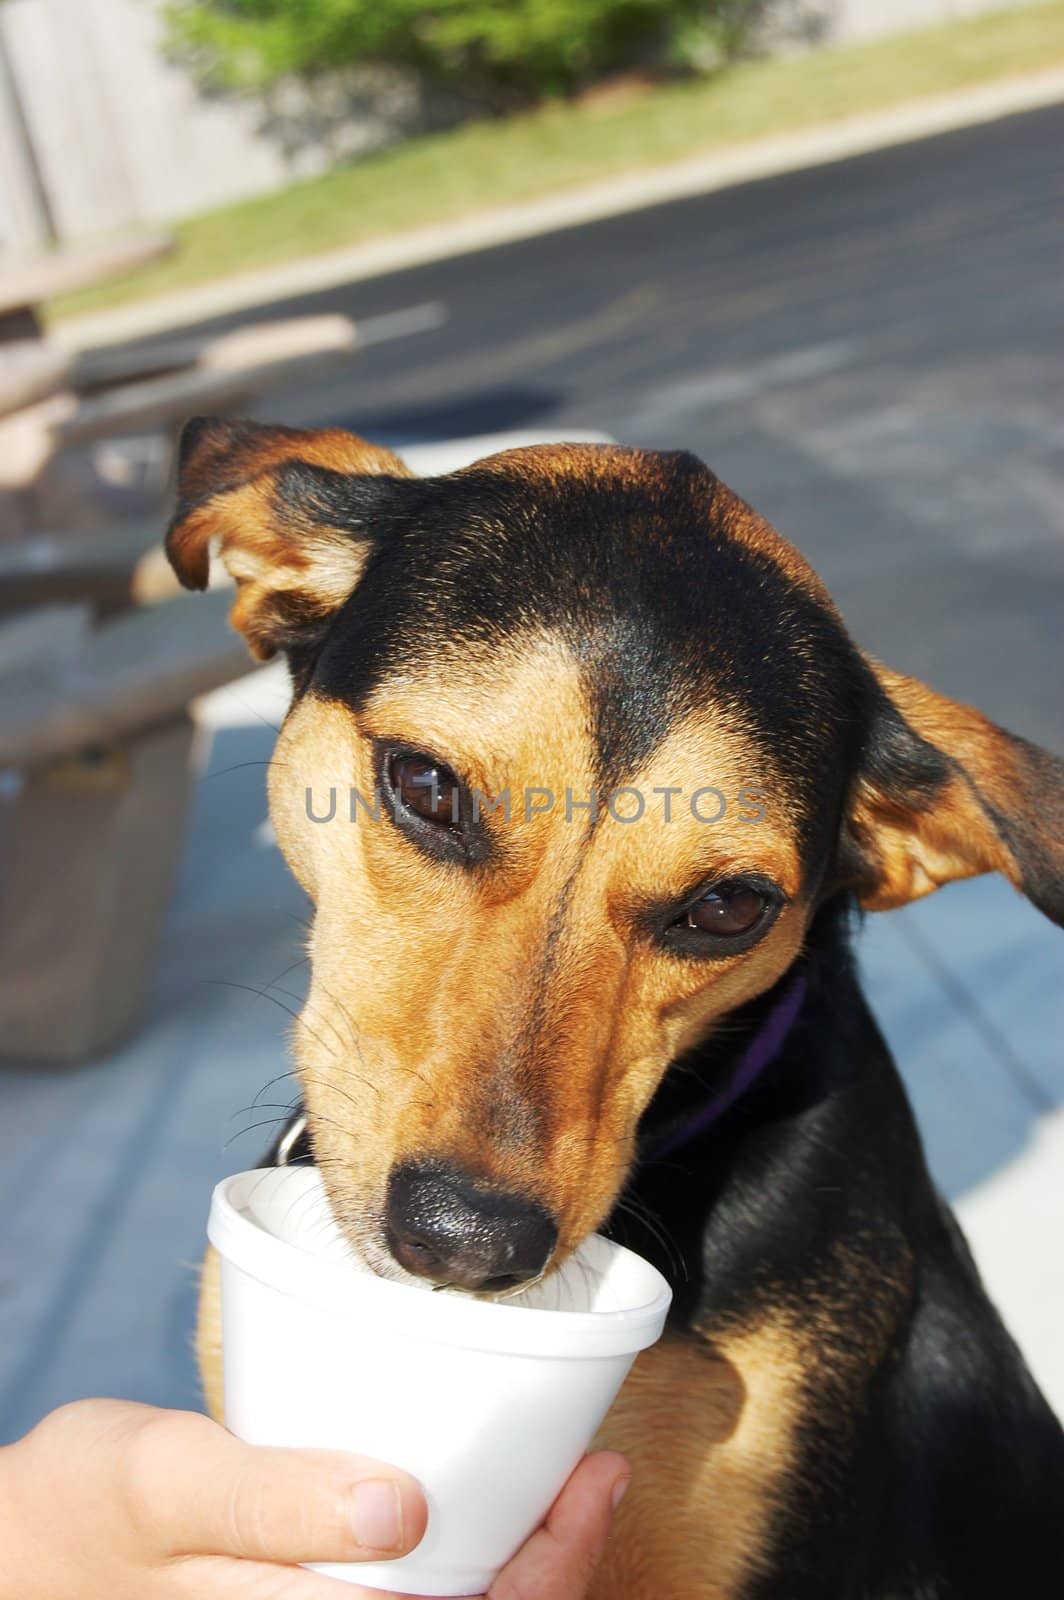 Dog eating ice cream by RefocusPhoto